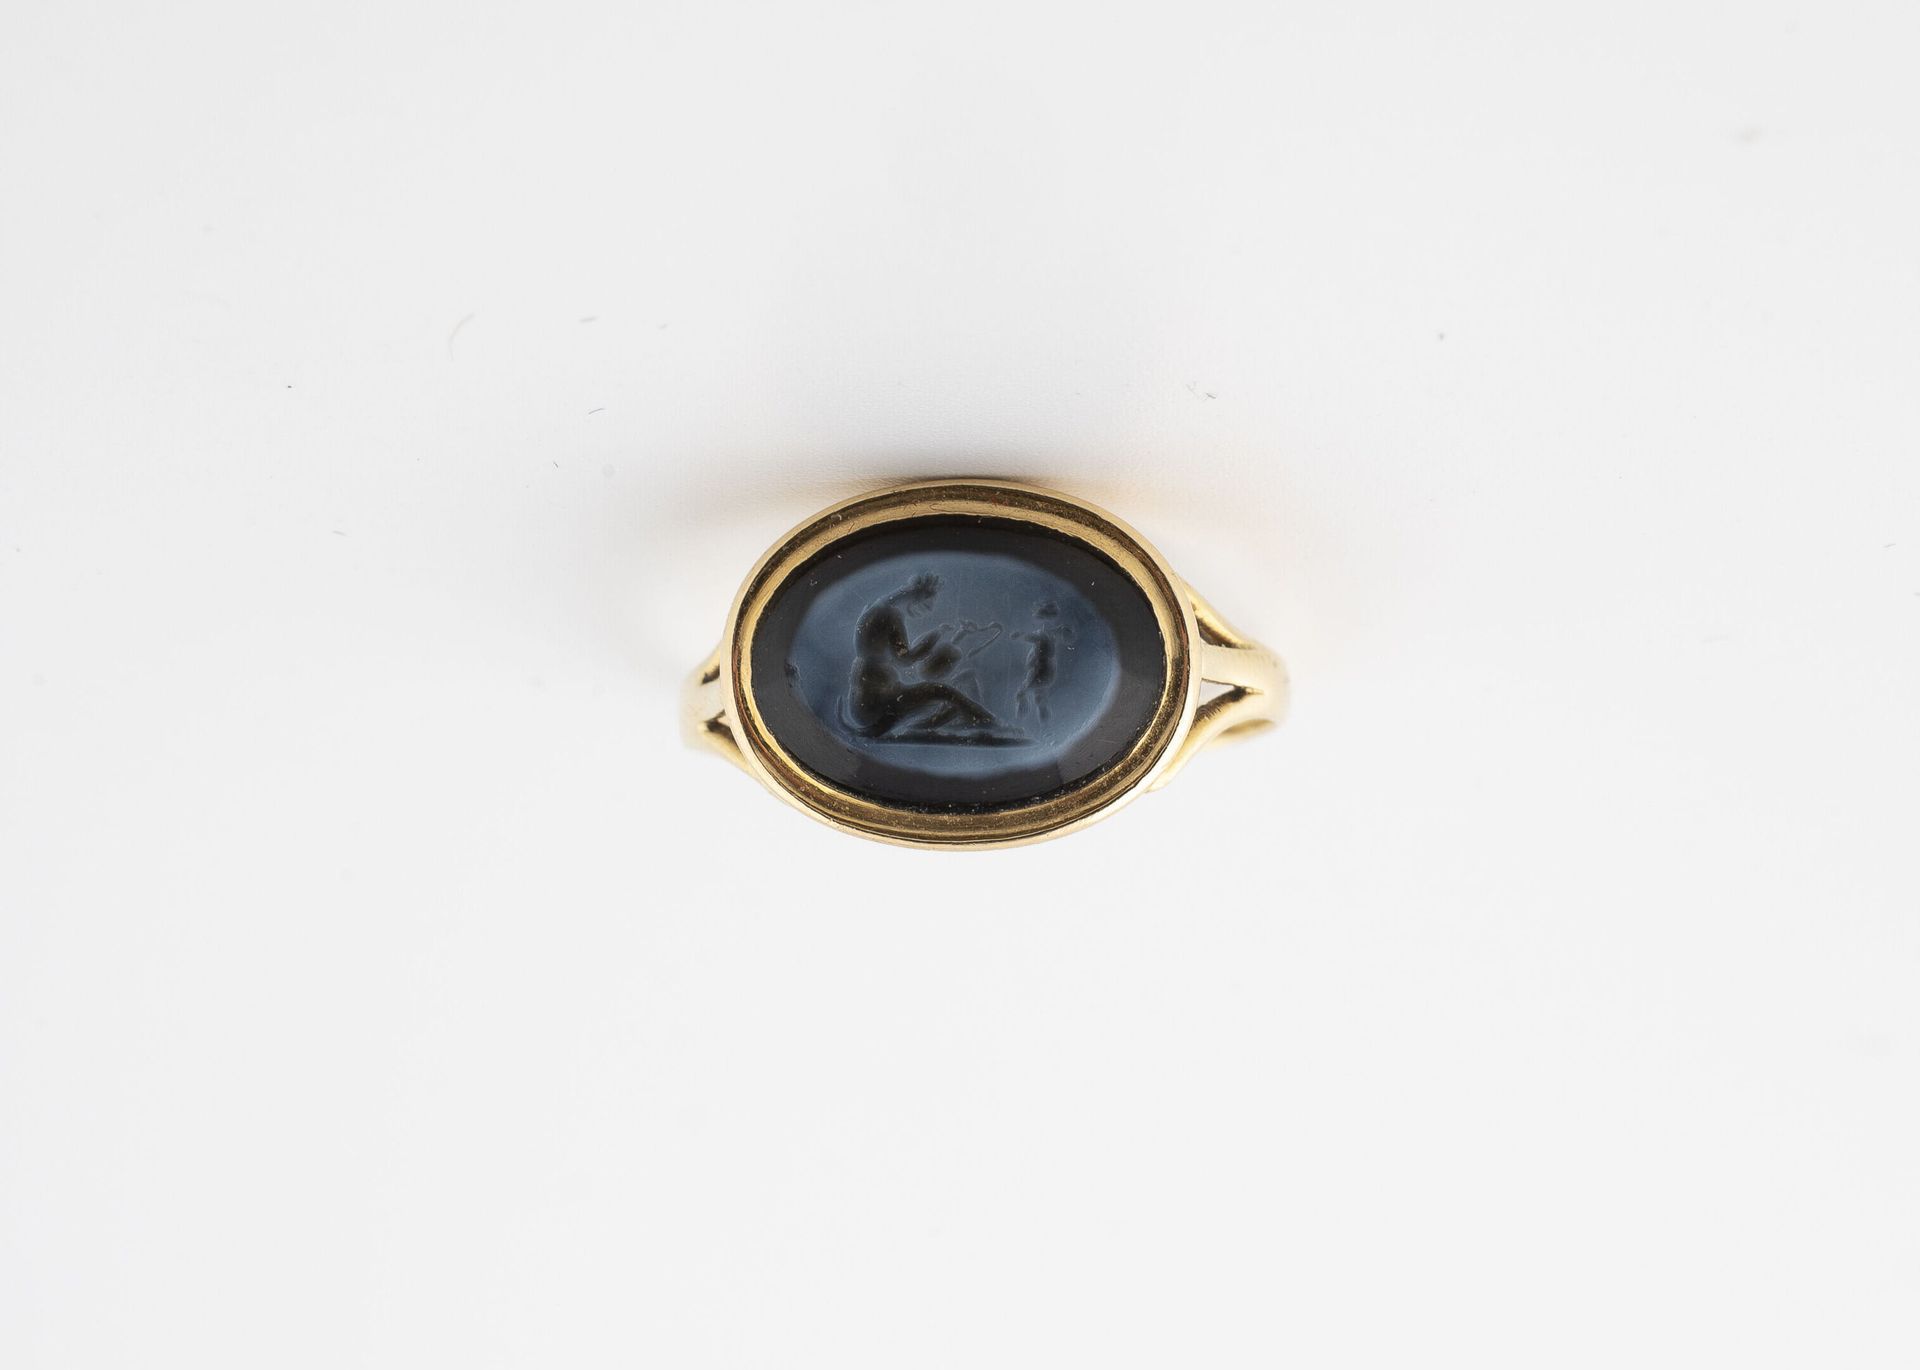 Null 黄金（750）戒指，镶嵌有玛瑙上的古老凹印。
毛重：2.6克。- 手指尺寸：56。
切割。有划痕。